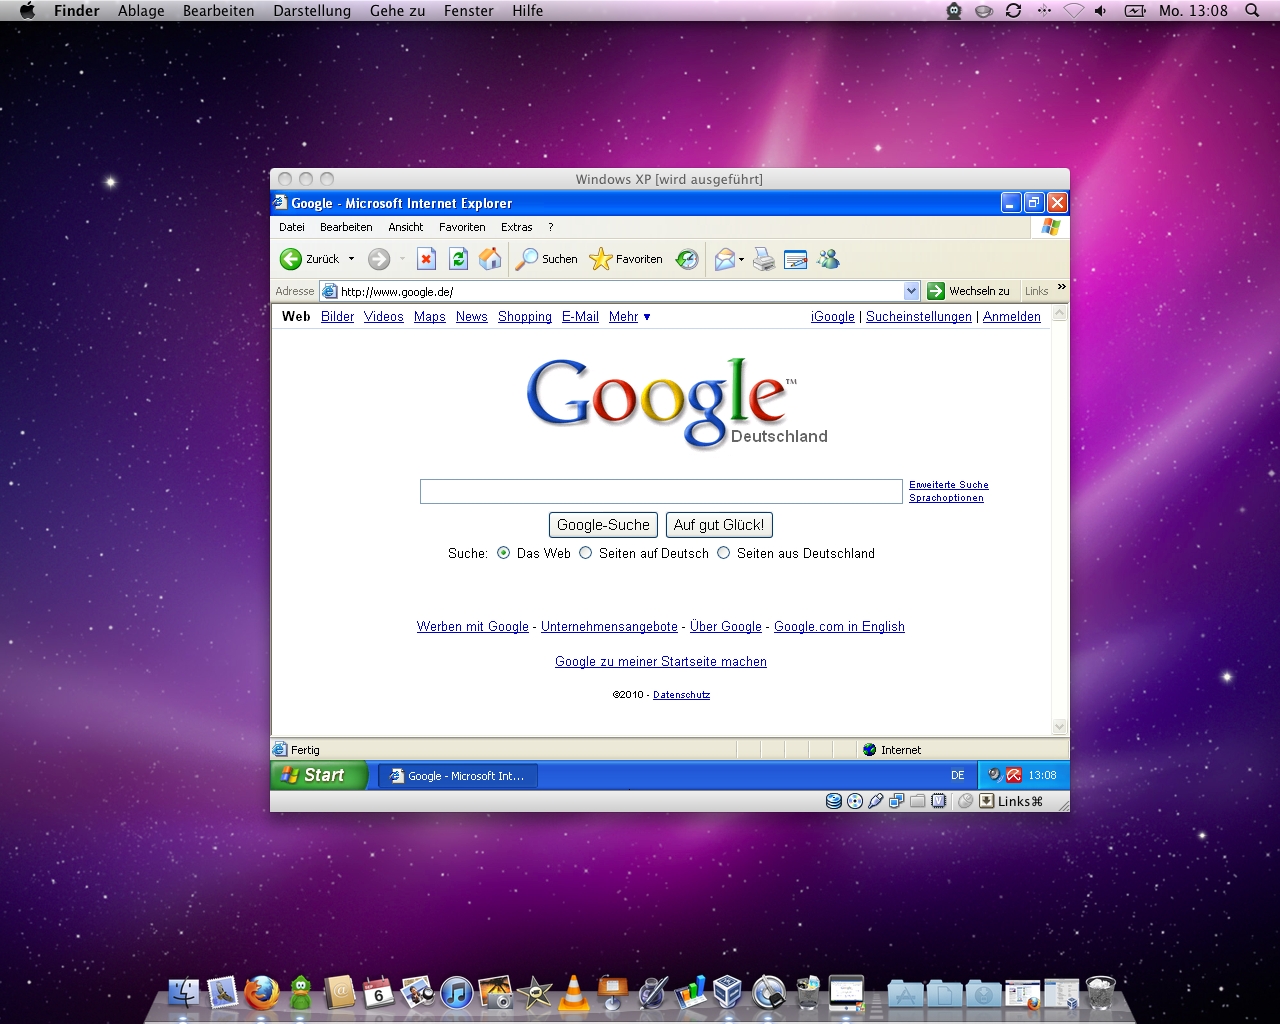 windows 10 style lock screen for mac os x